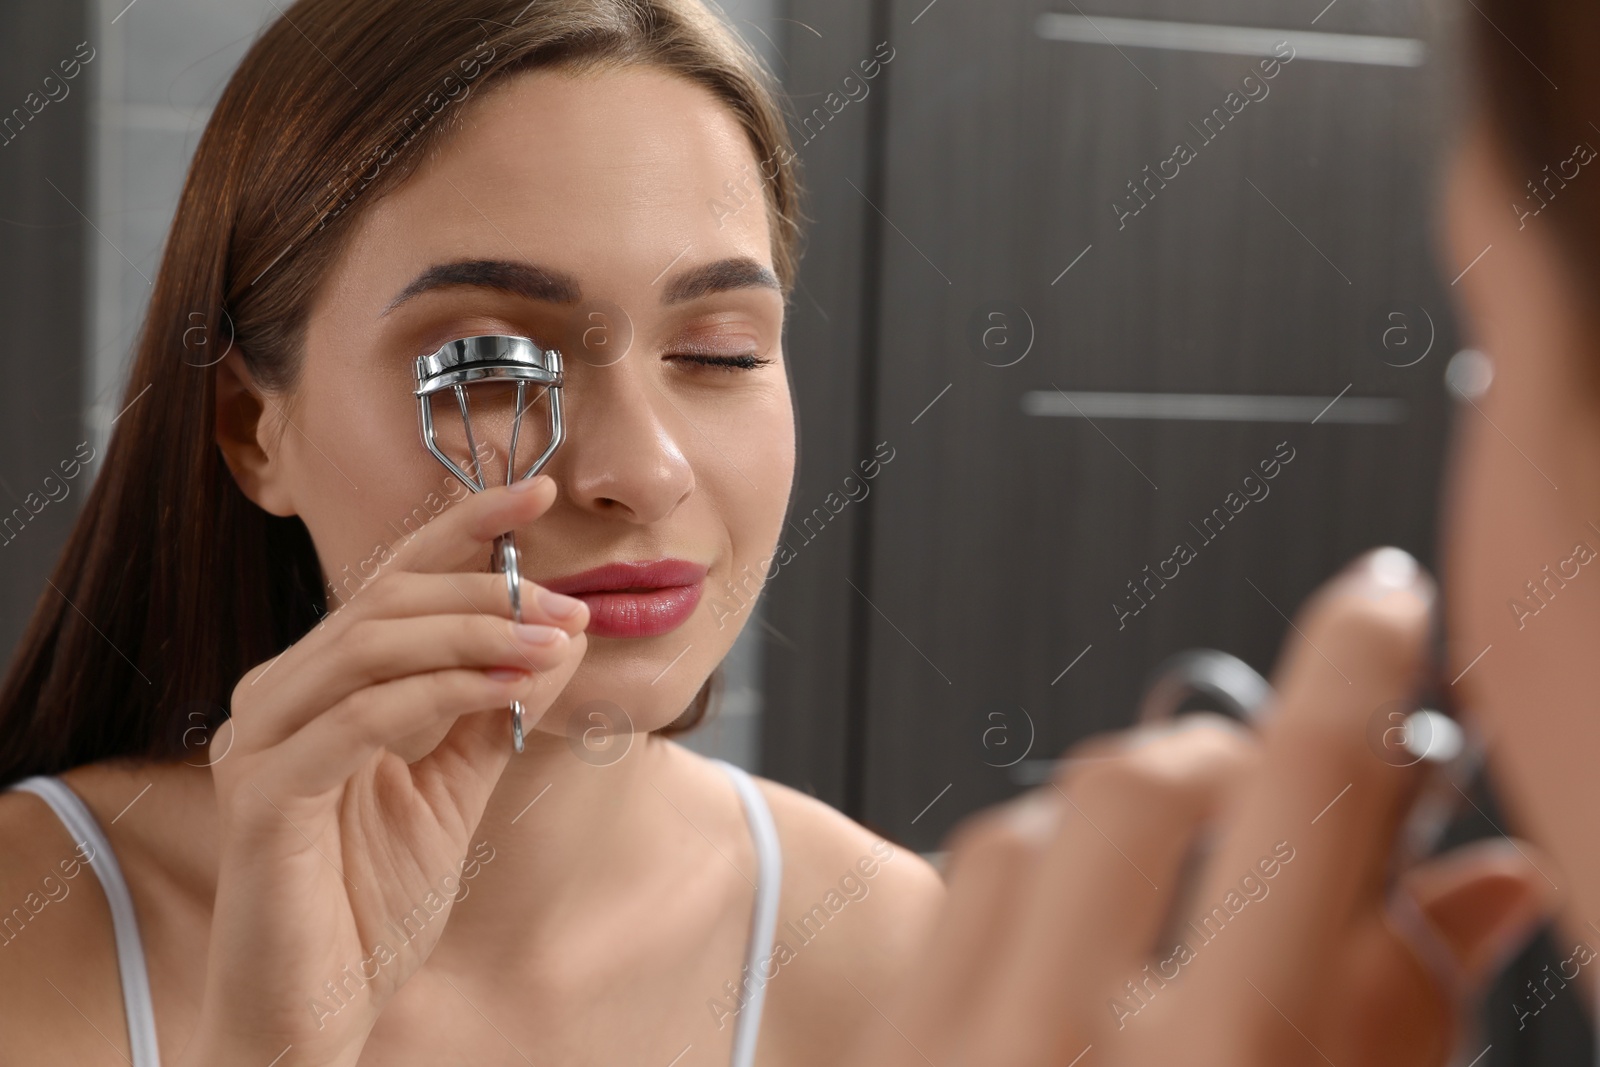 Photo of Woman using eyelash curler near mirror indoors